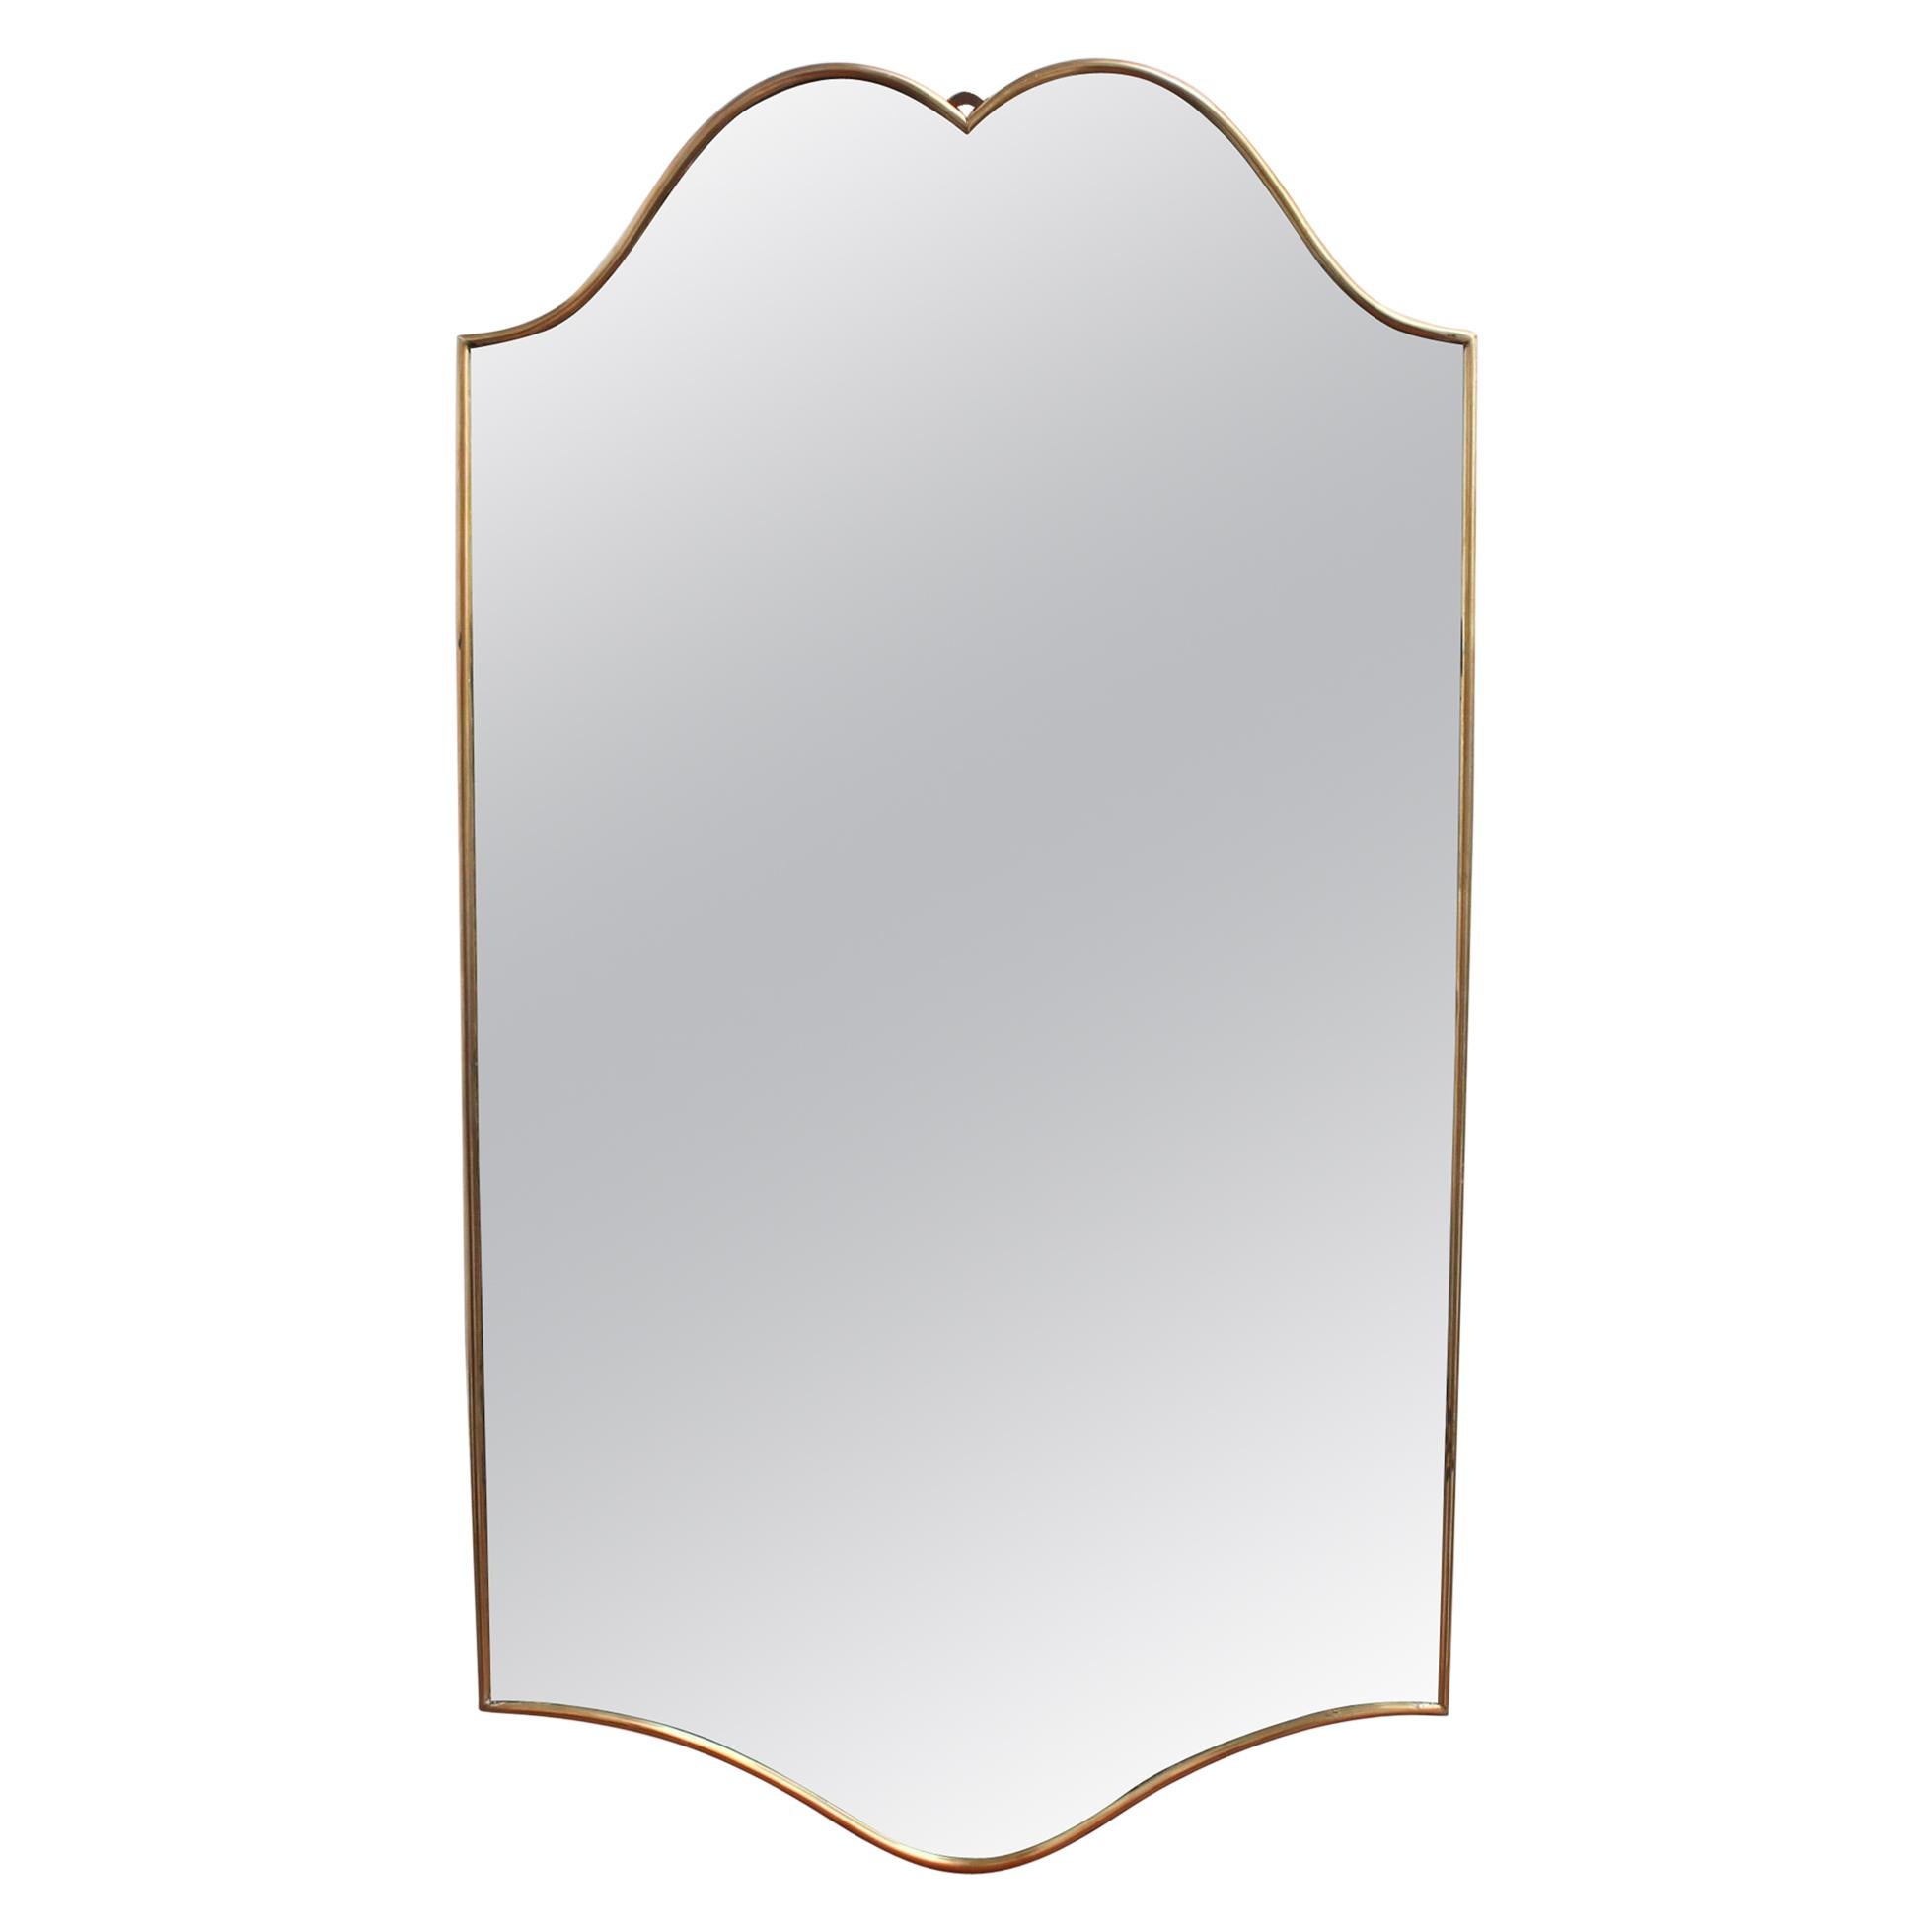 Midcentury Italian Wall Mirror with Brass Frame, circa 1950s